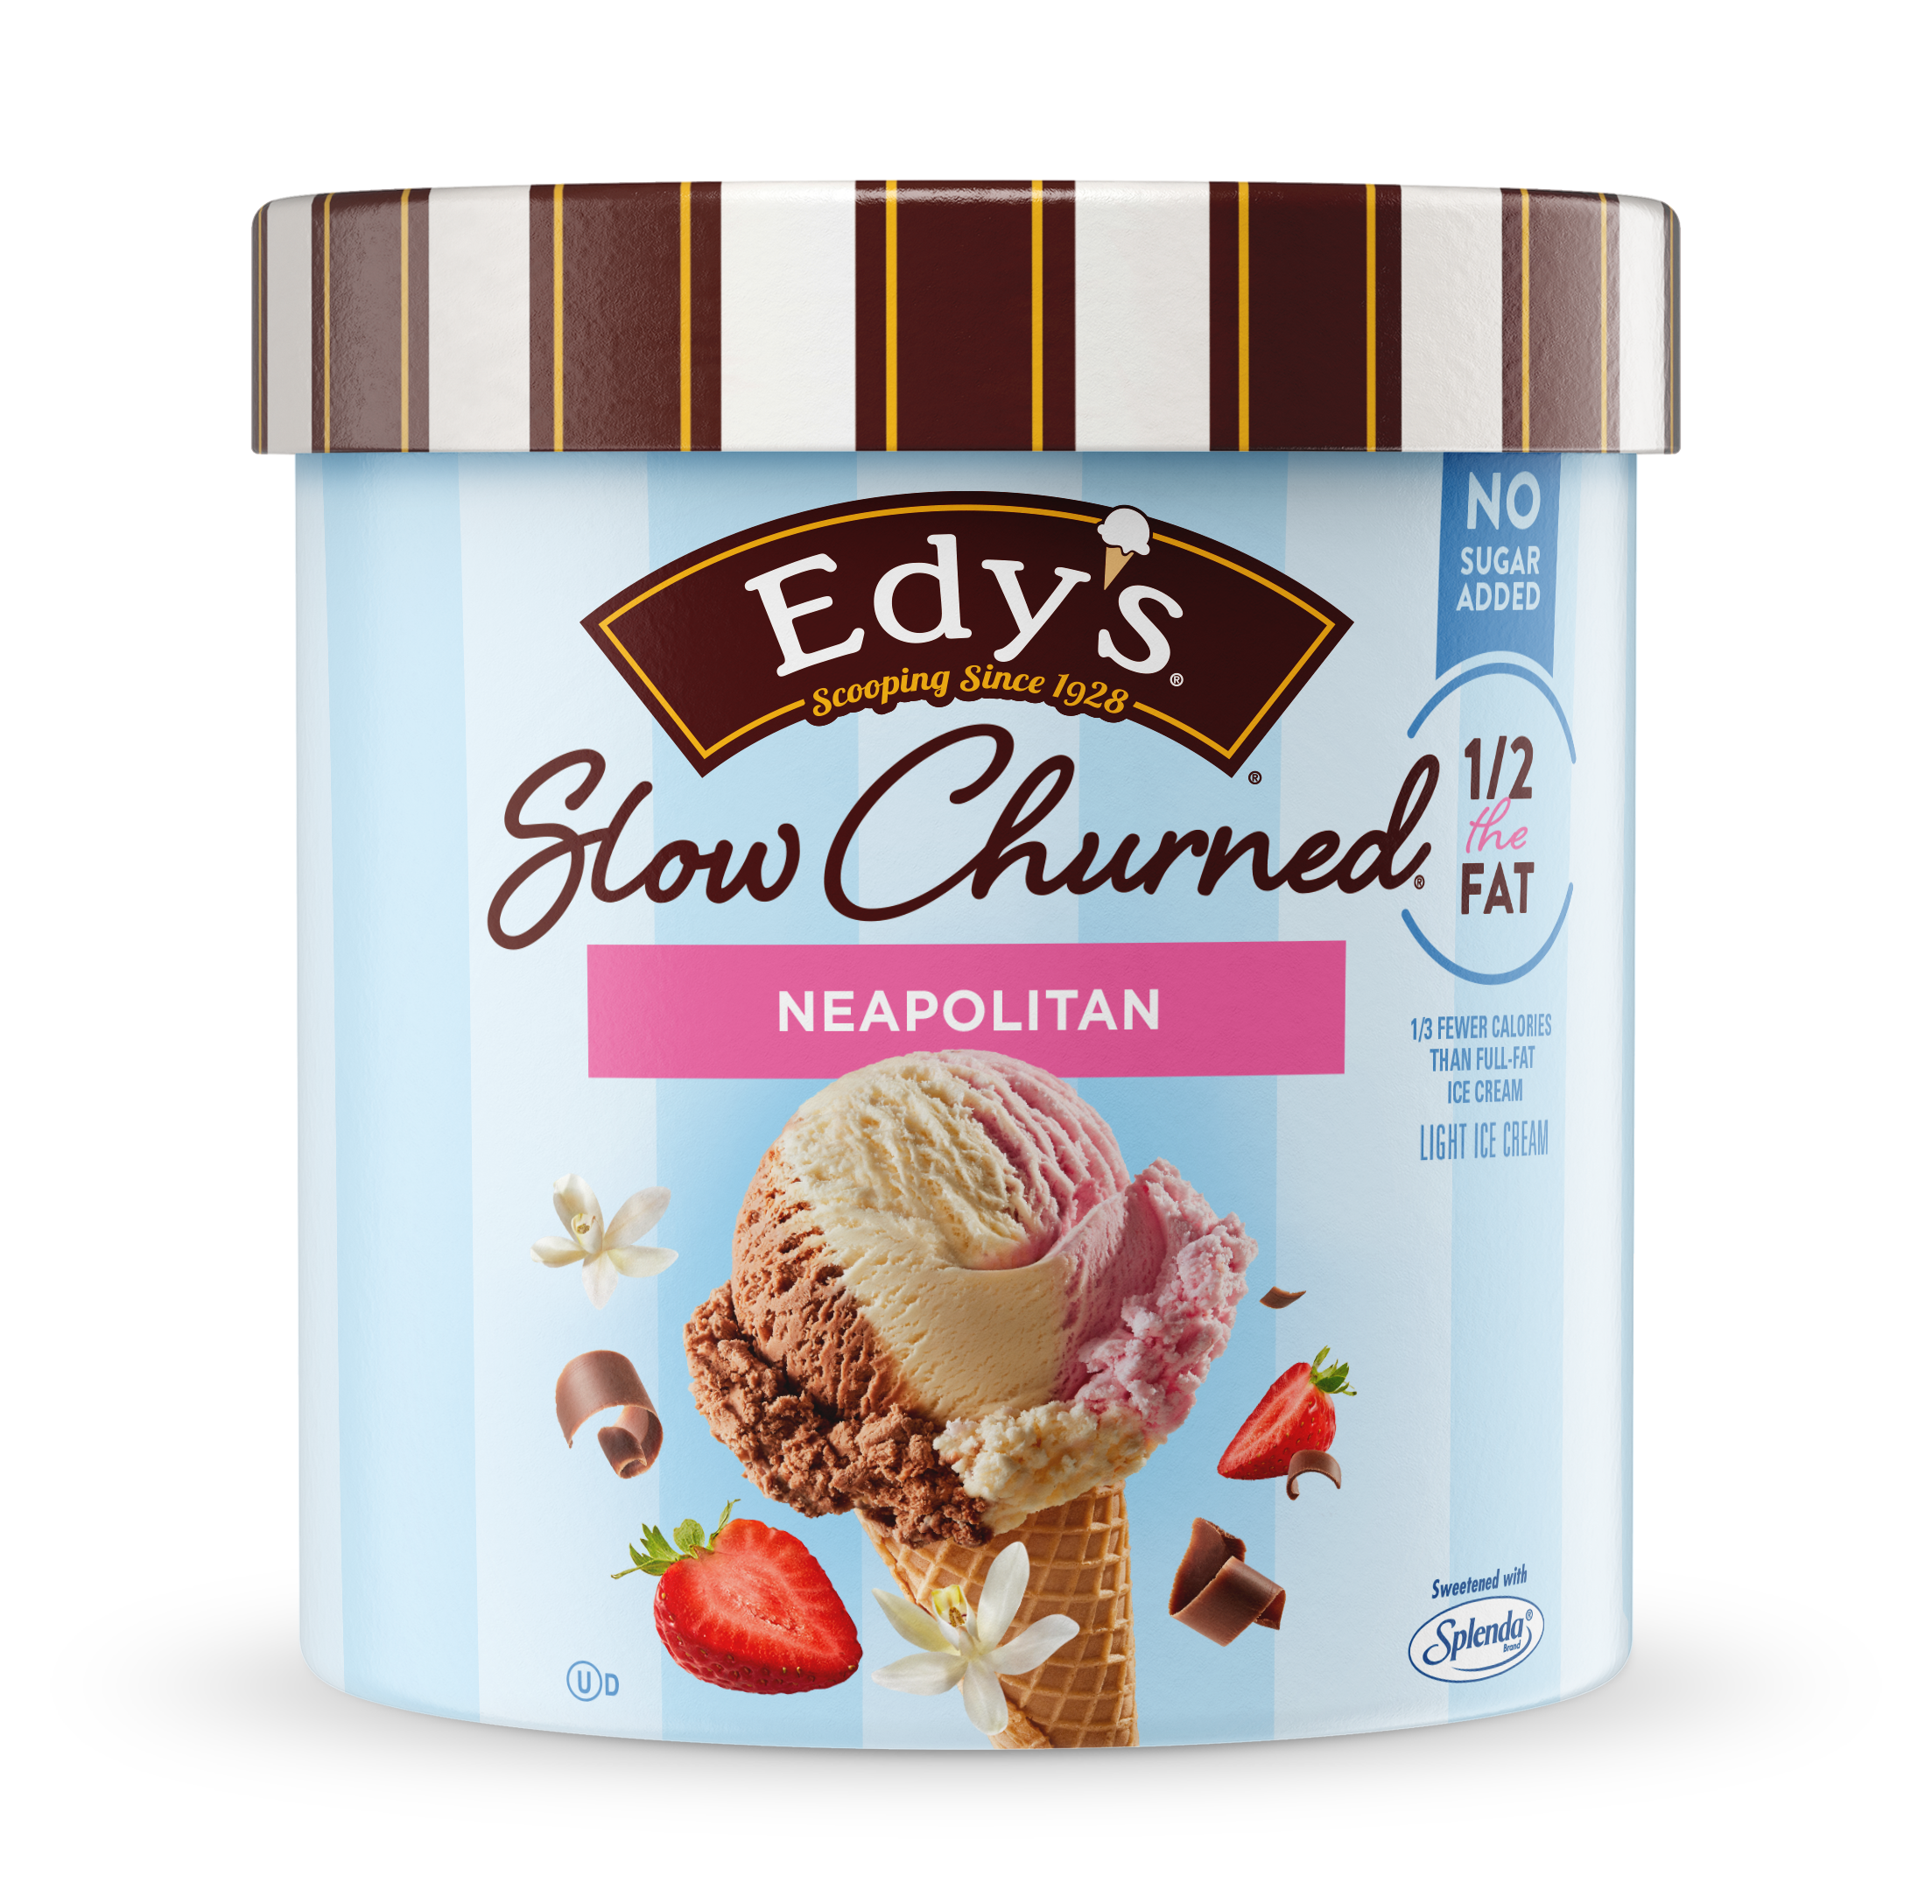 Carton of Edy's slow-churned Neapolitan ice cream